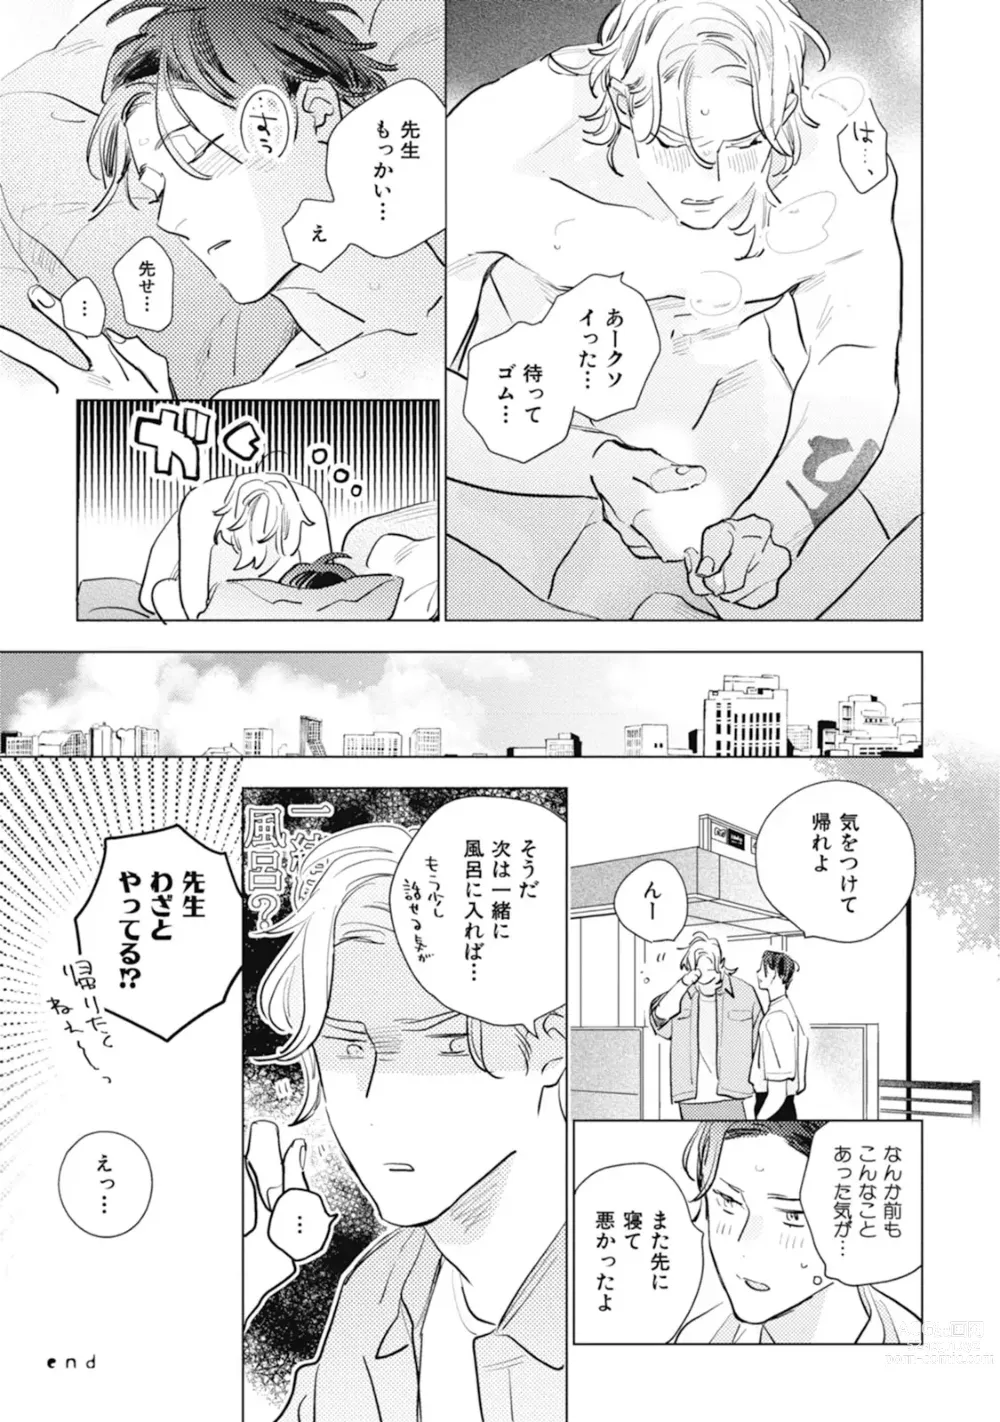 Page 211 of manga Kurikaeshi Ai no Oto